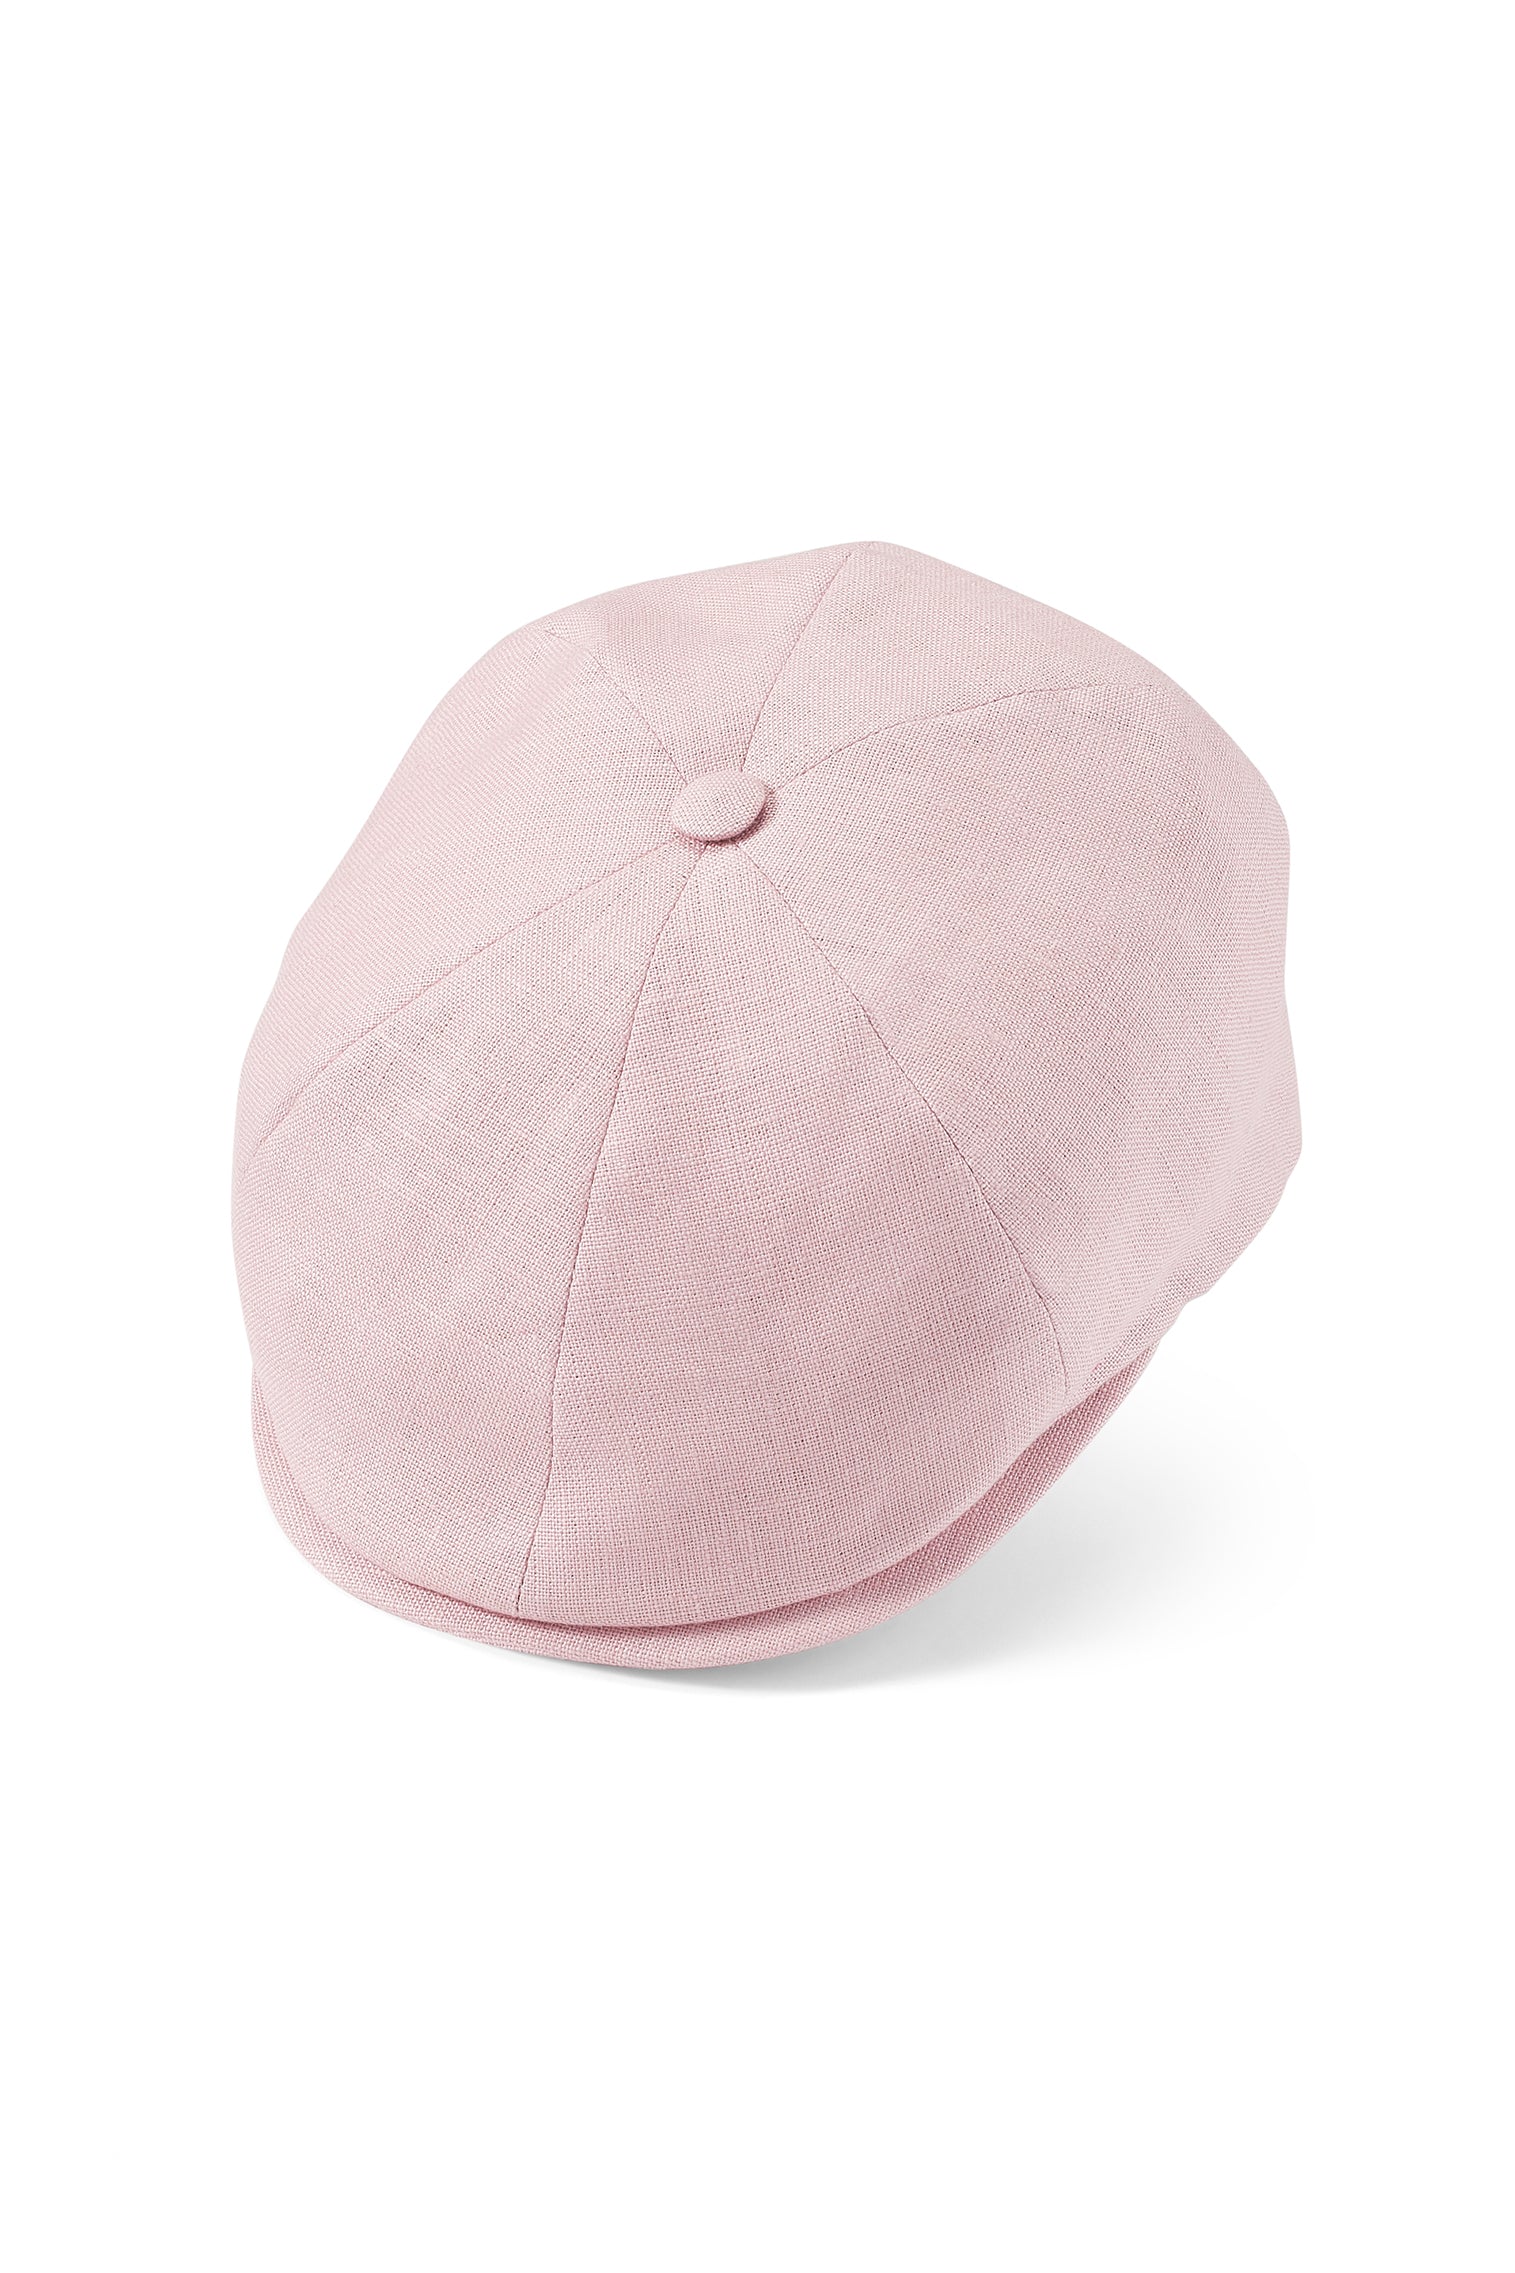 Tahoe Pink Bakerboy Cap - Best Selling Hats - Lock & Co. Hatters London UK